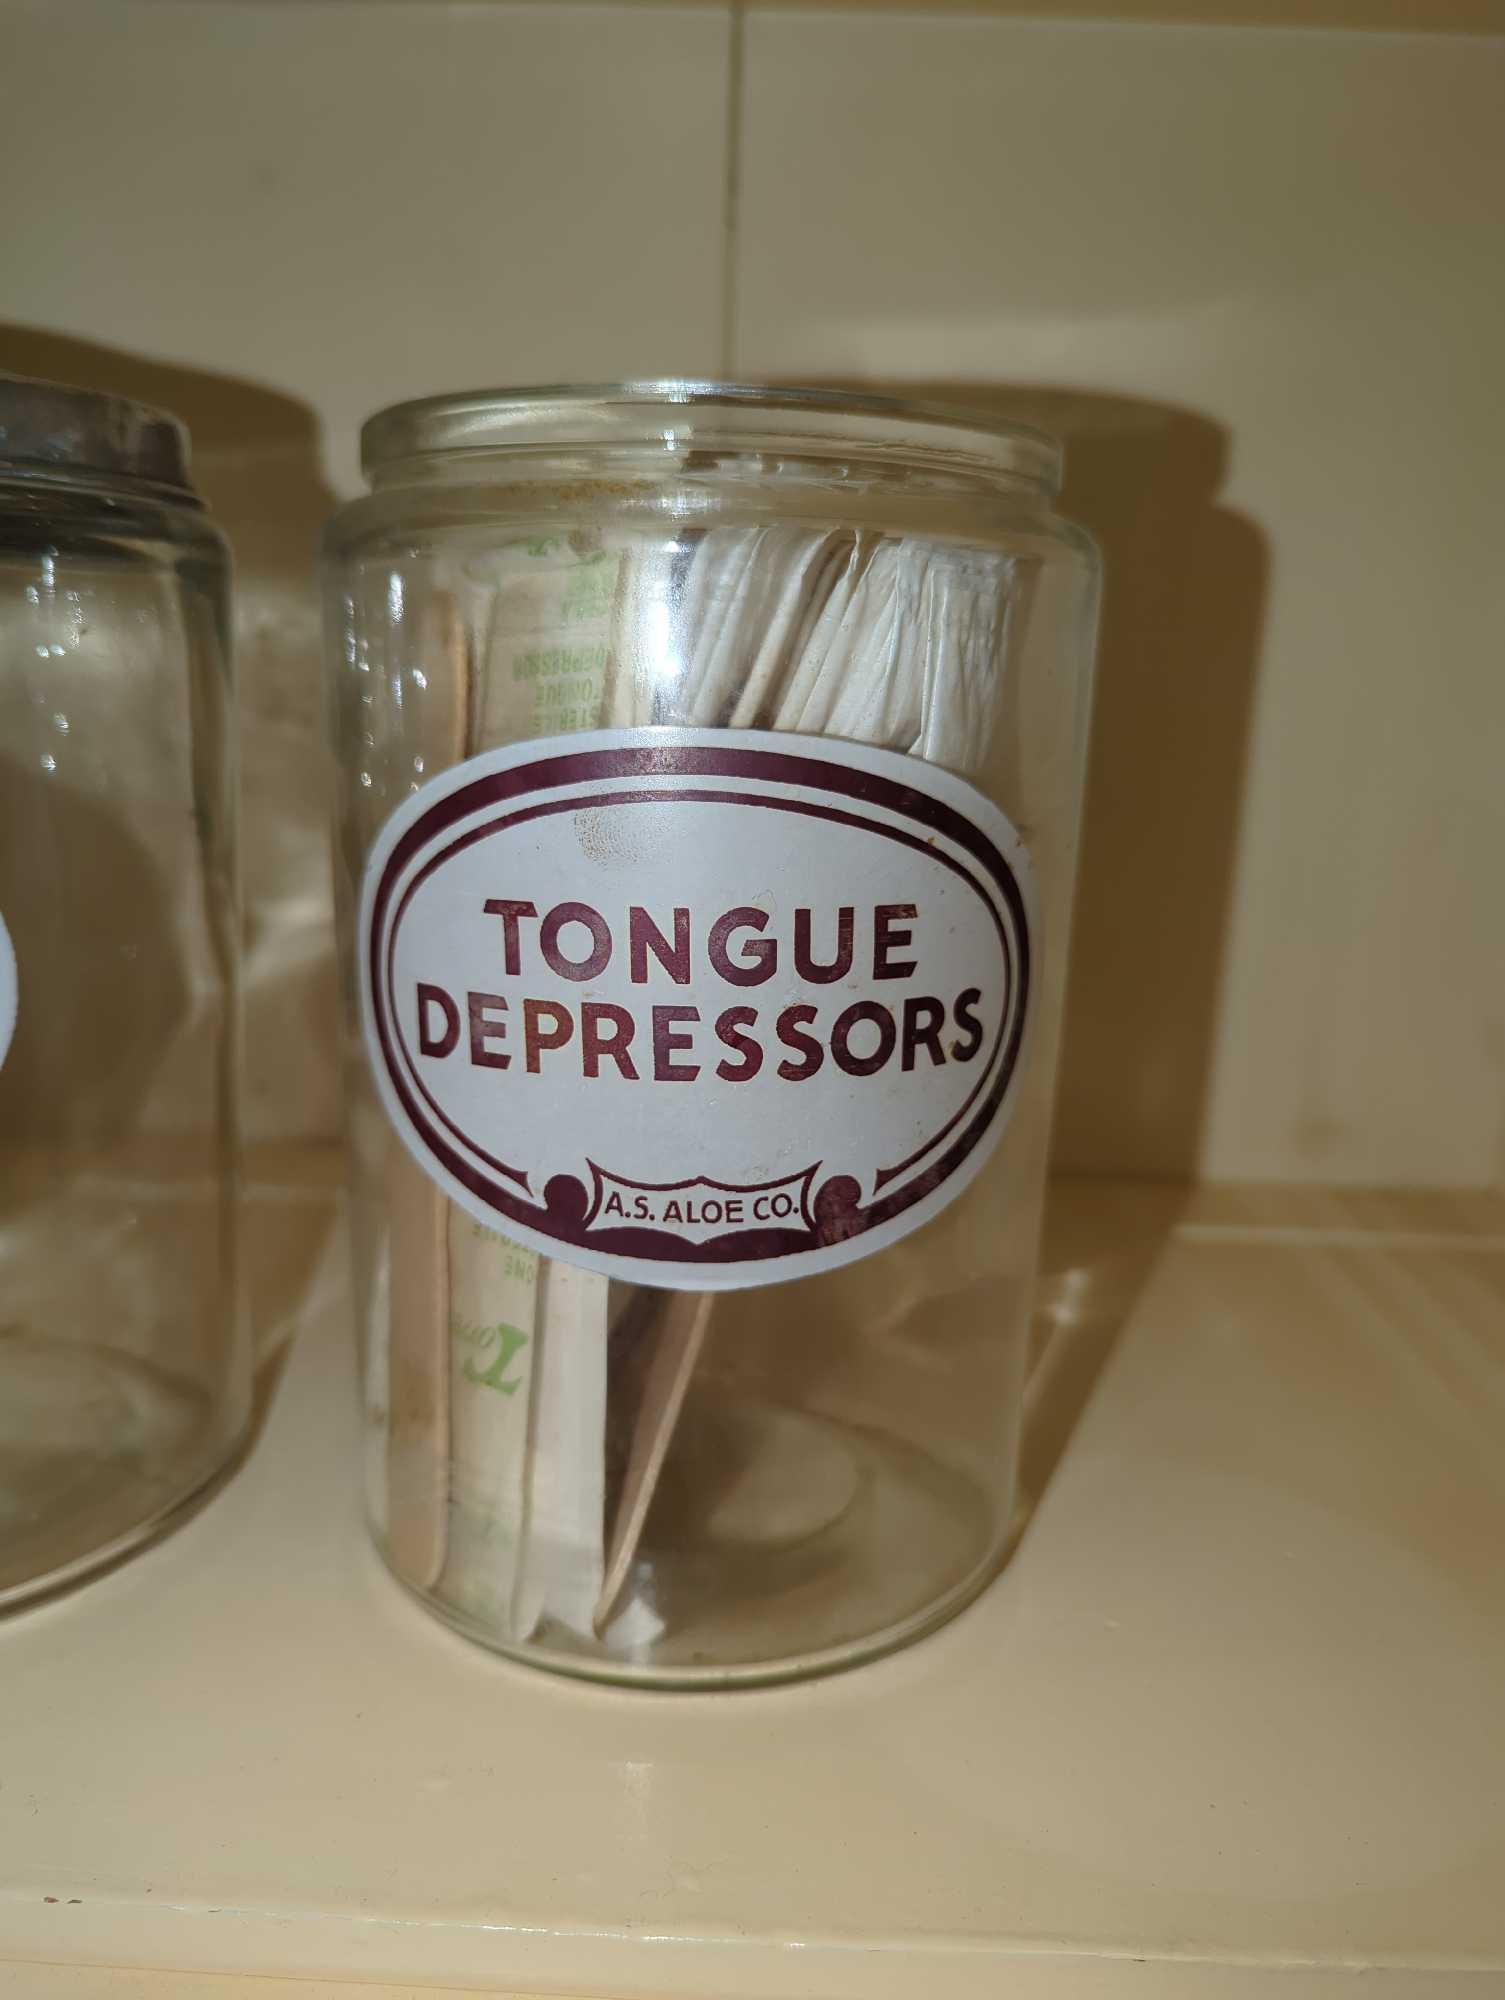 Lot of 4 Vintage Medical Jars Profex Bandages, Gauze, Applicators, and Tongue Depressors Doctor's